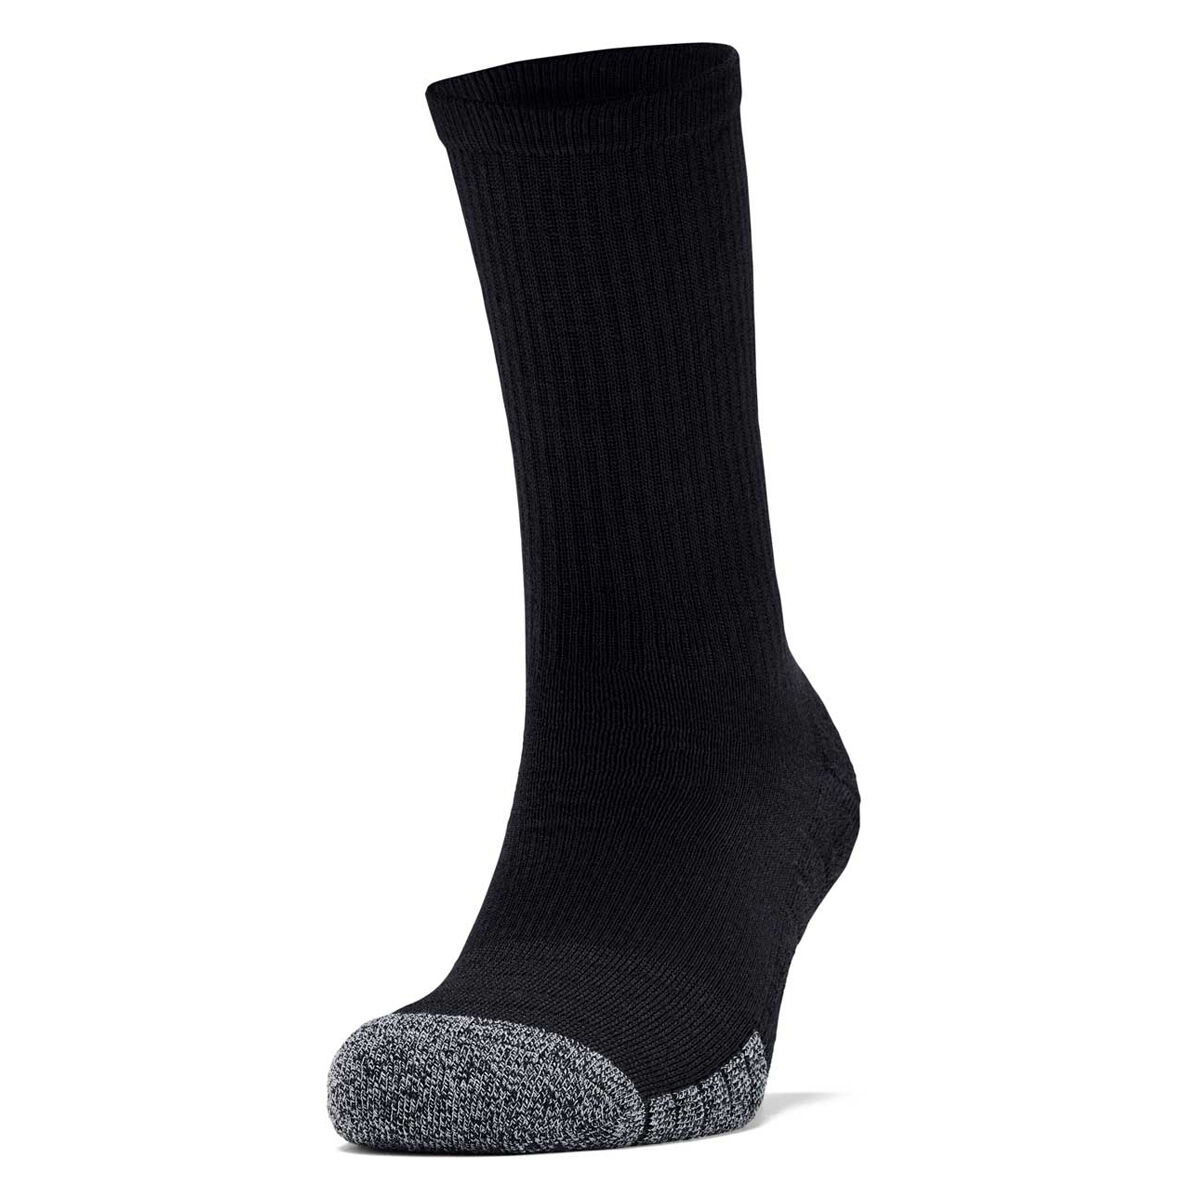 Black Cotton Socks. I Love BaseBall Socks 